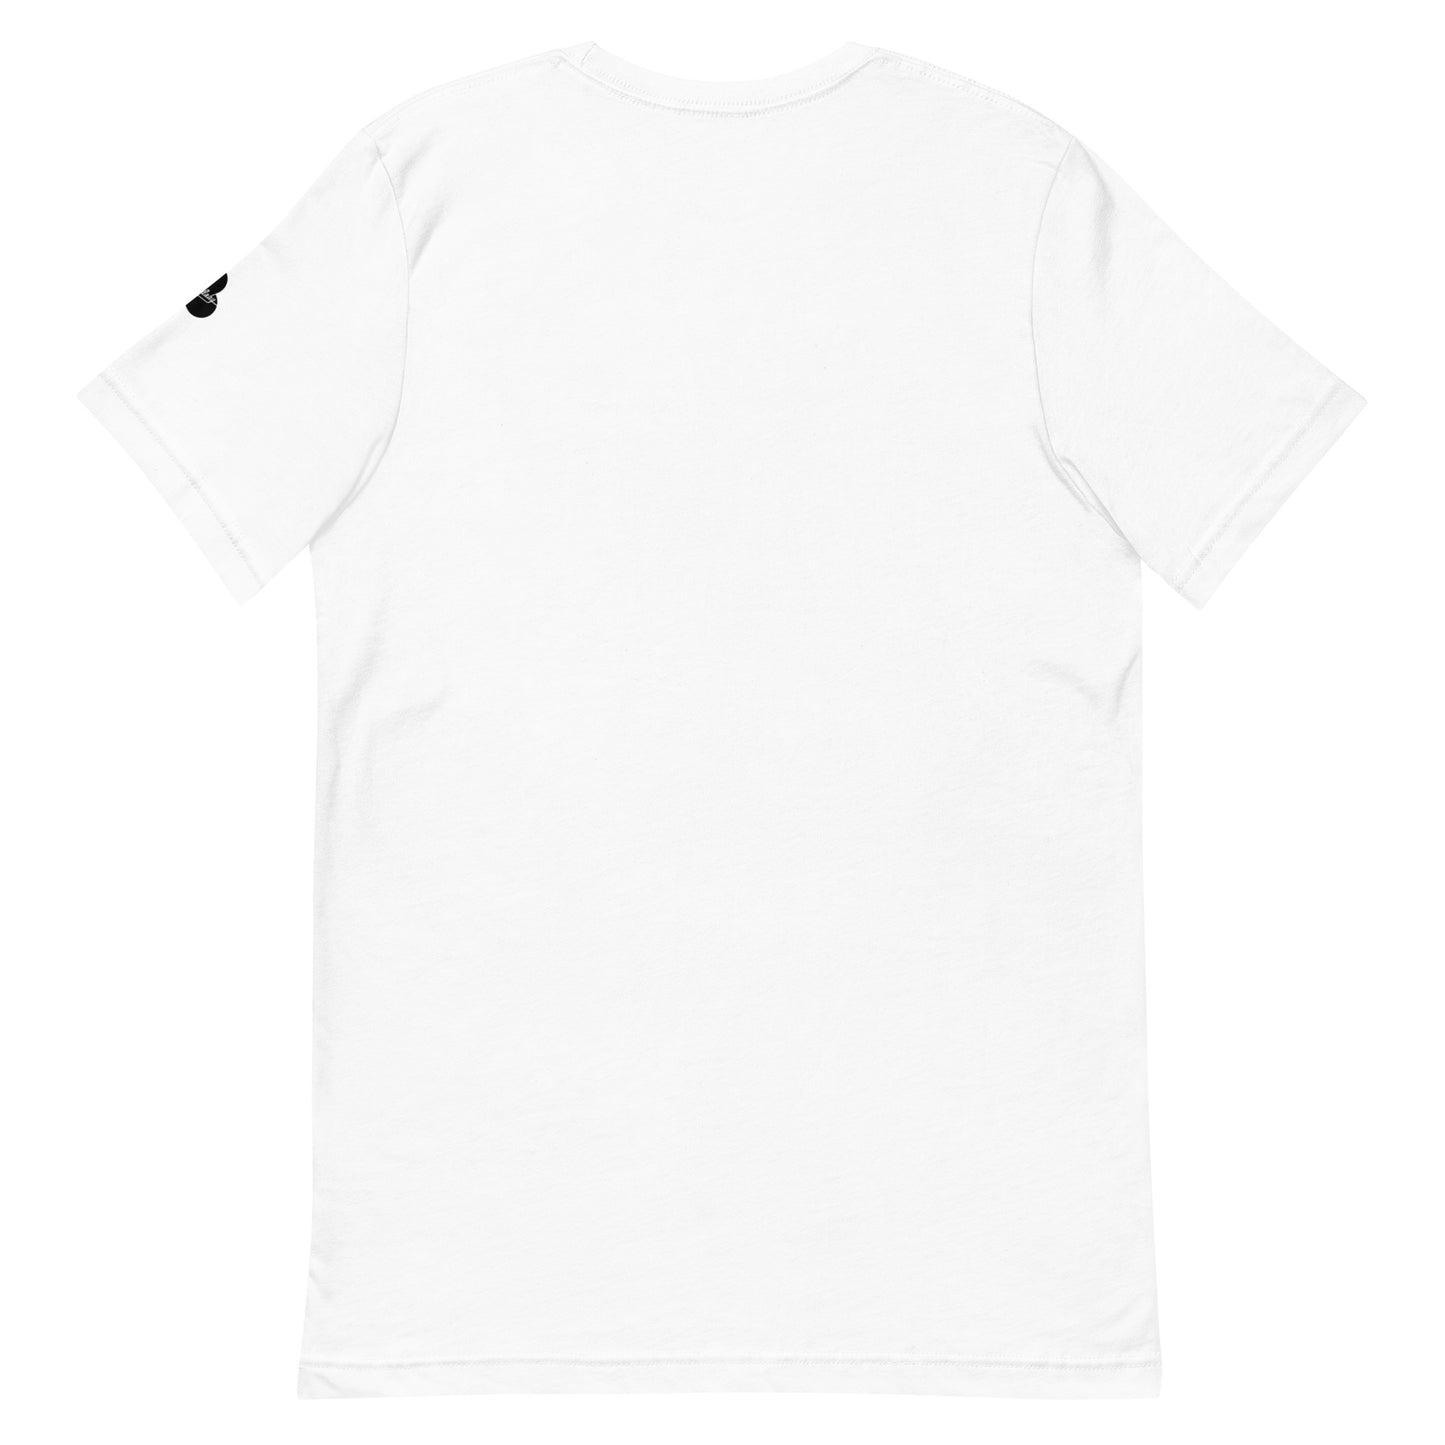 LondonBaby Rascal Romeo (Punked) T-shirt design